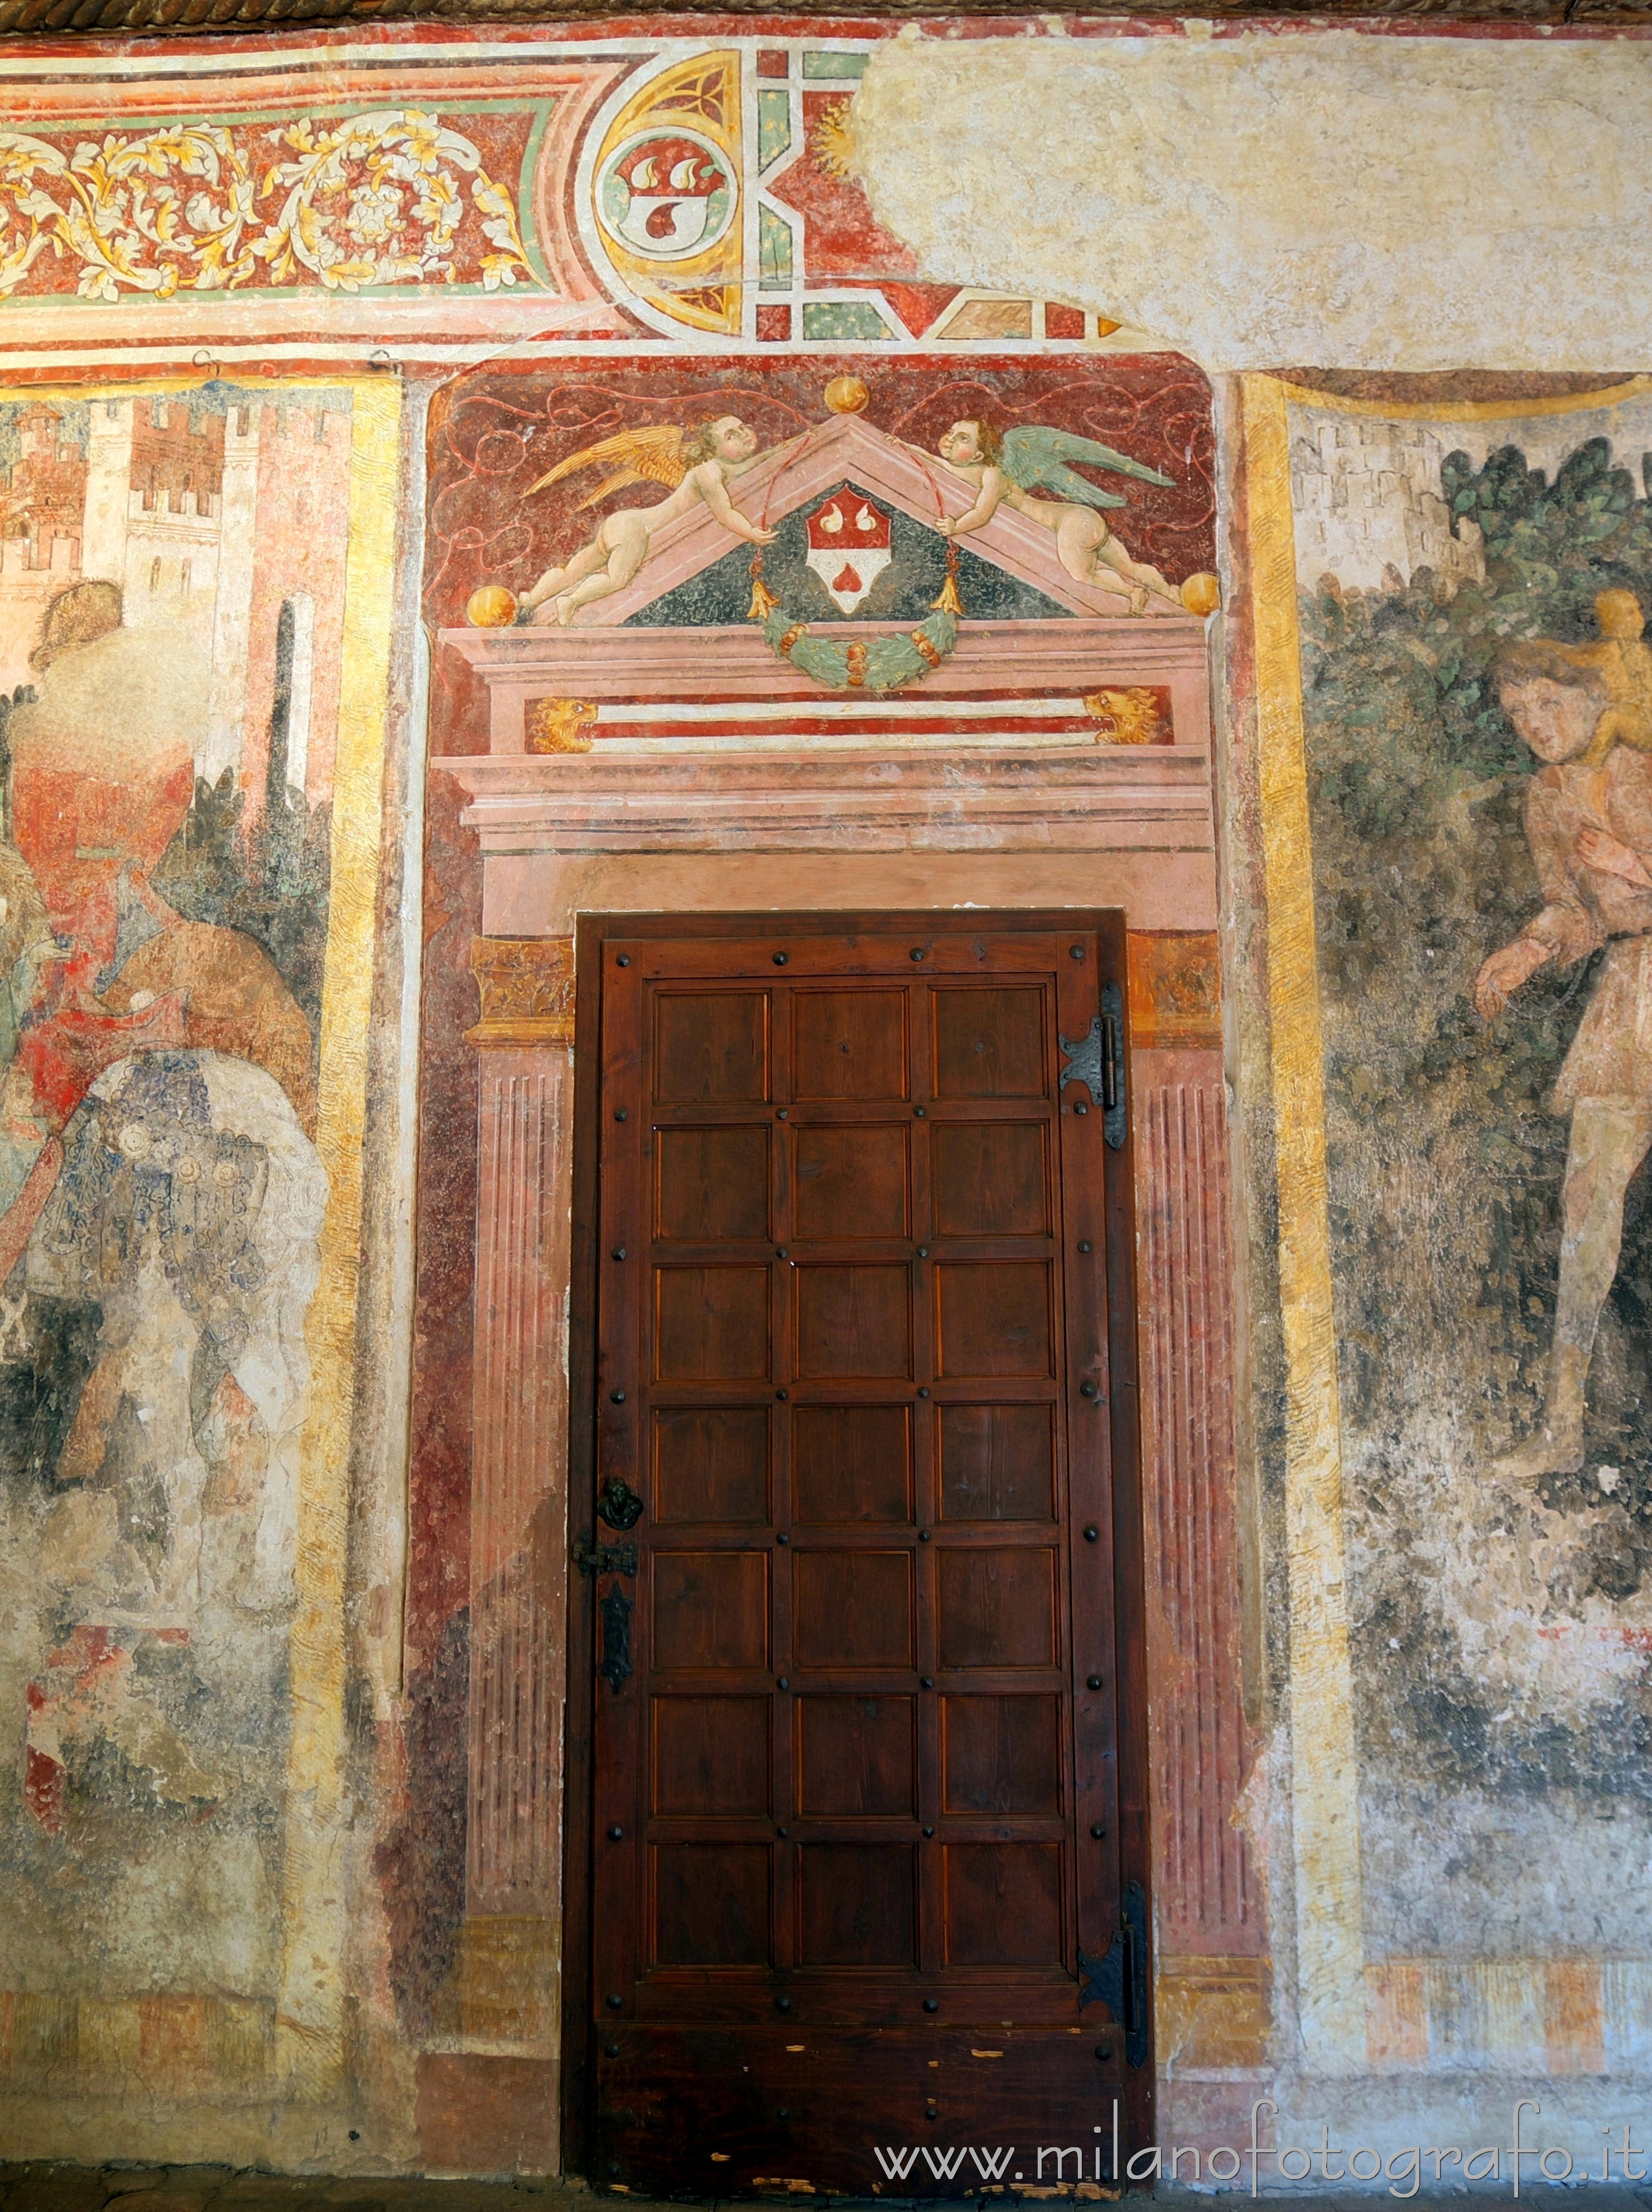 Cavernago (Bergamo, Italy): Door surrounded by frescoes in the court of the Malpaga Castle - Cavernago (Bergamo, Italy)